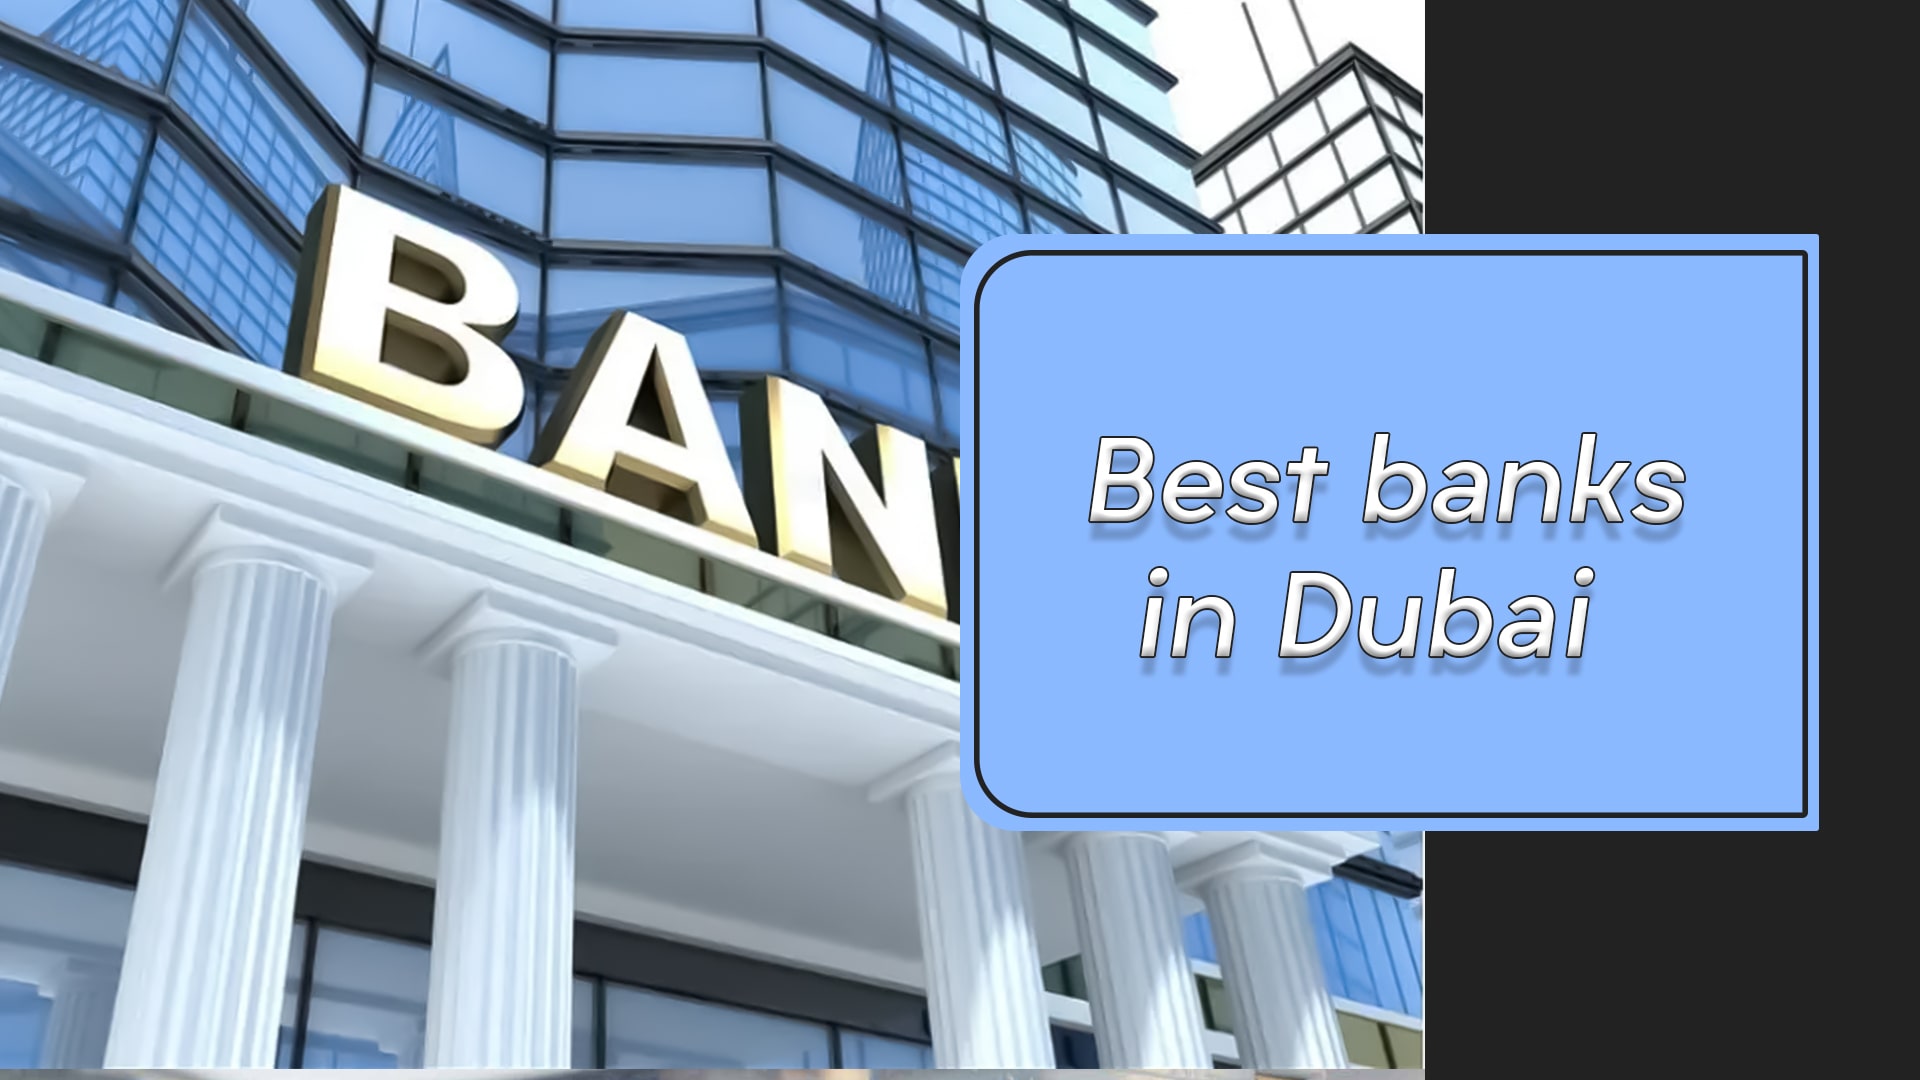 Best banks in Dubai